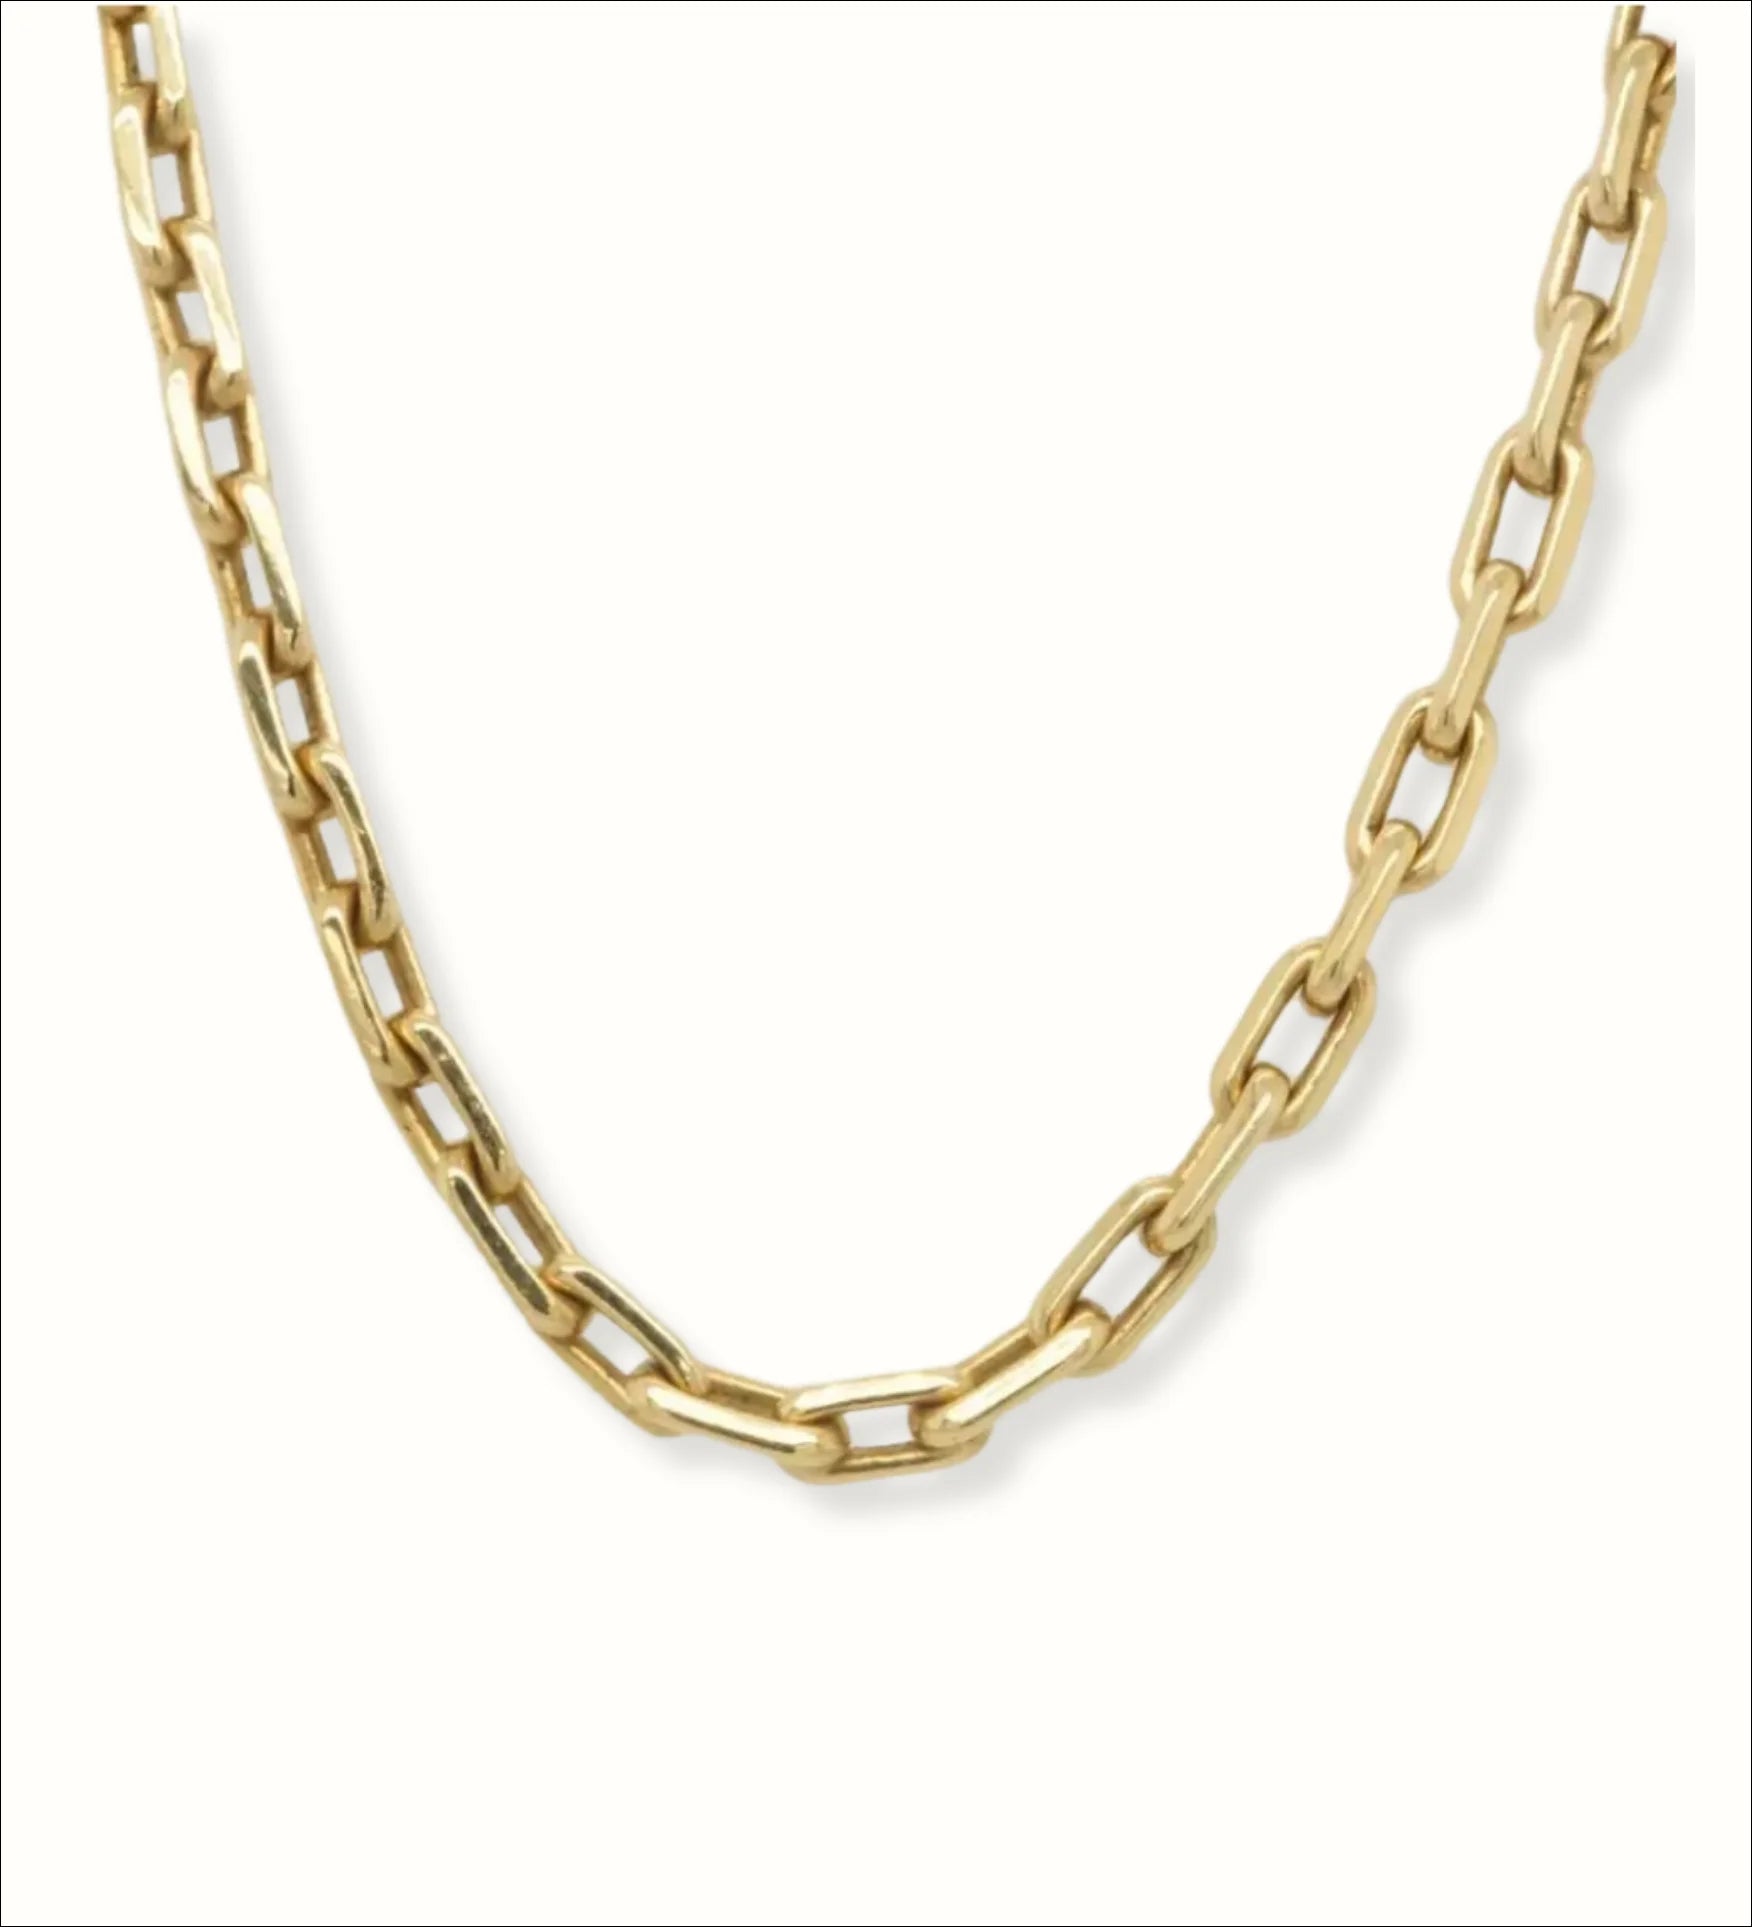 Gold Jewelry: 18k Diamond Cut Chain | Chains